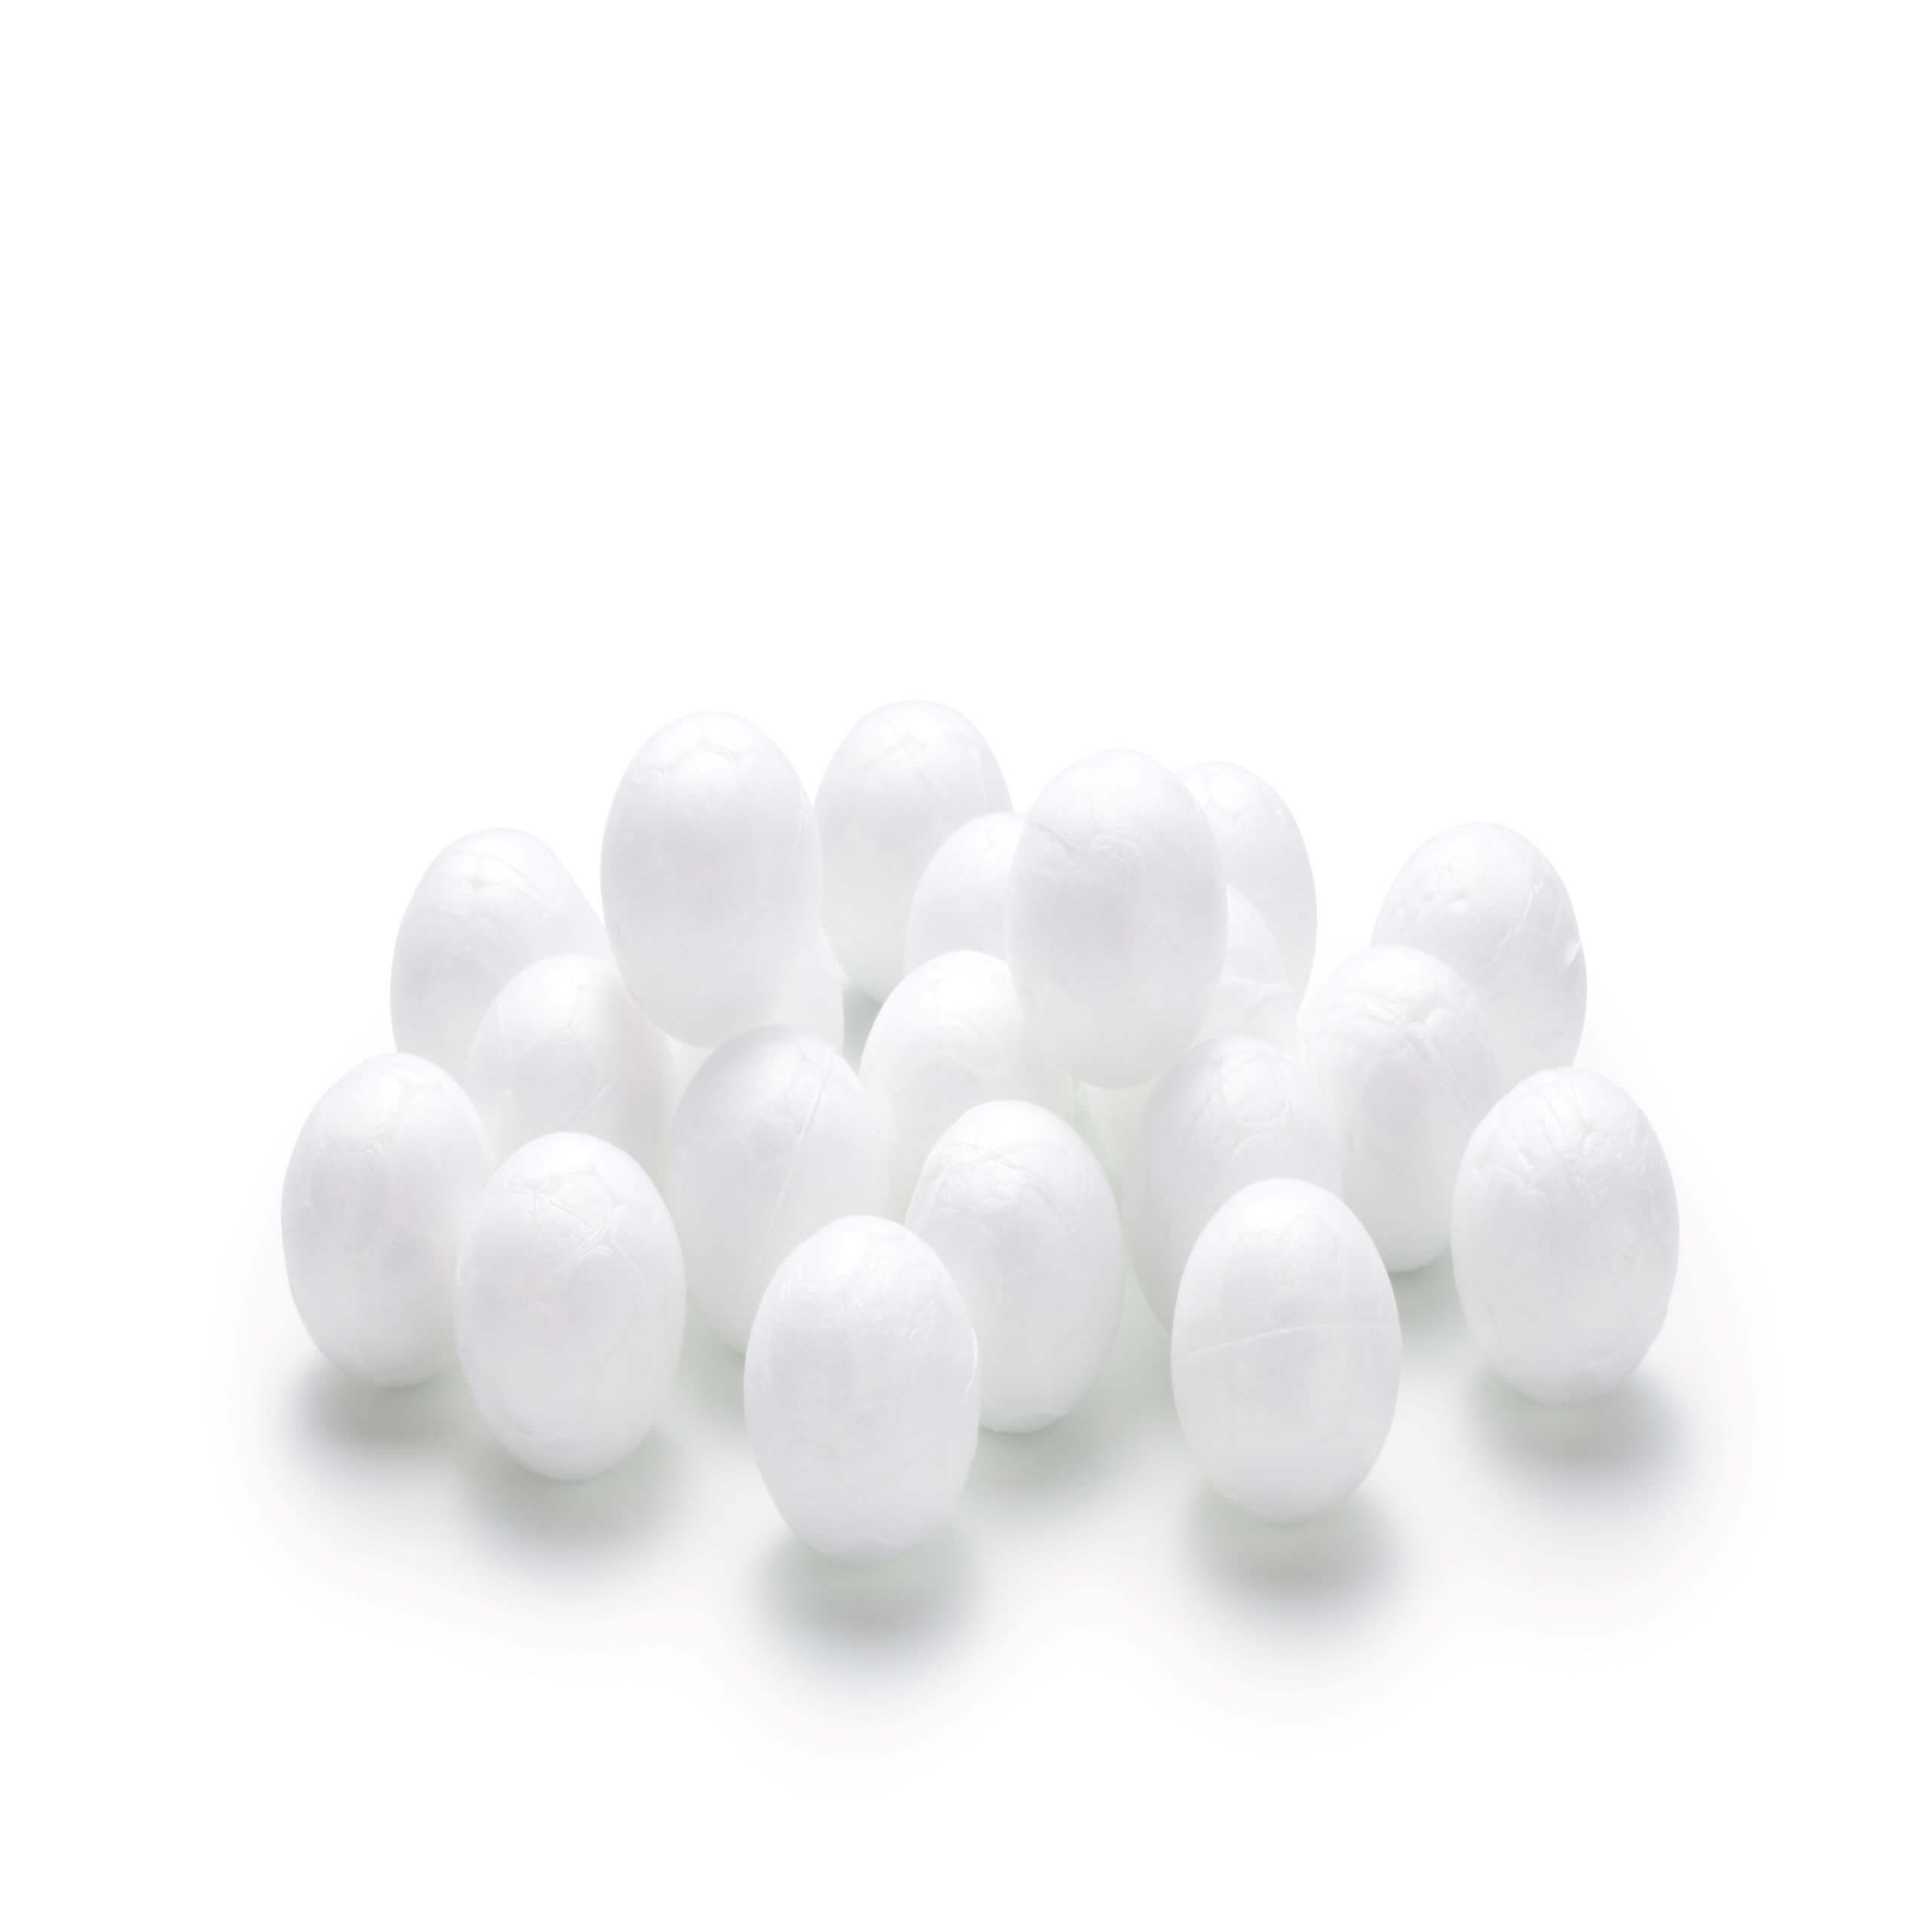 A close up image of Polystyrene Beanbag Balls.